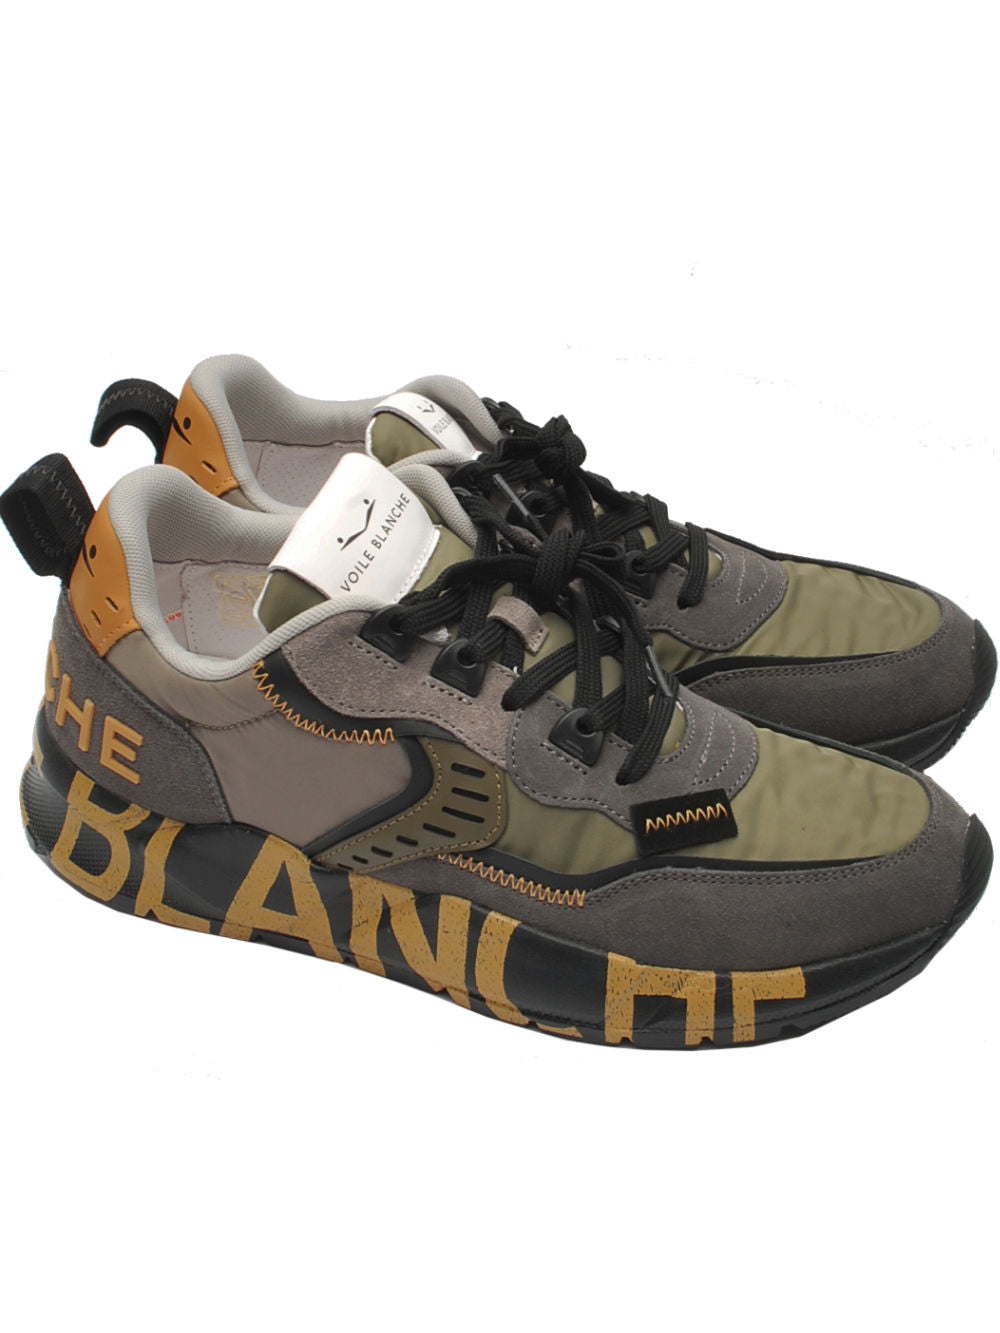 Voile blanche sneaker club01 7465 antracite army mustard ai23